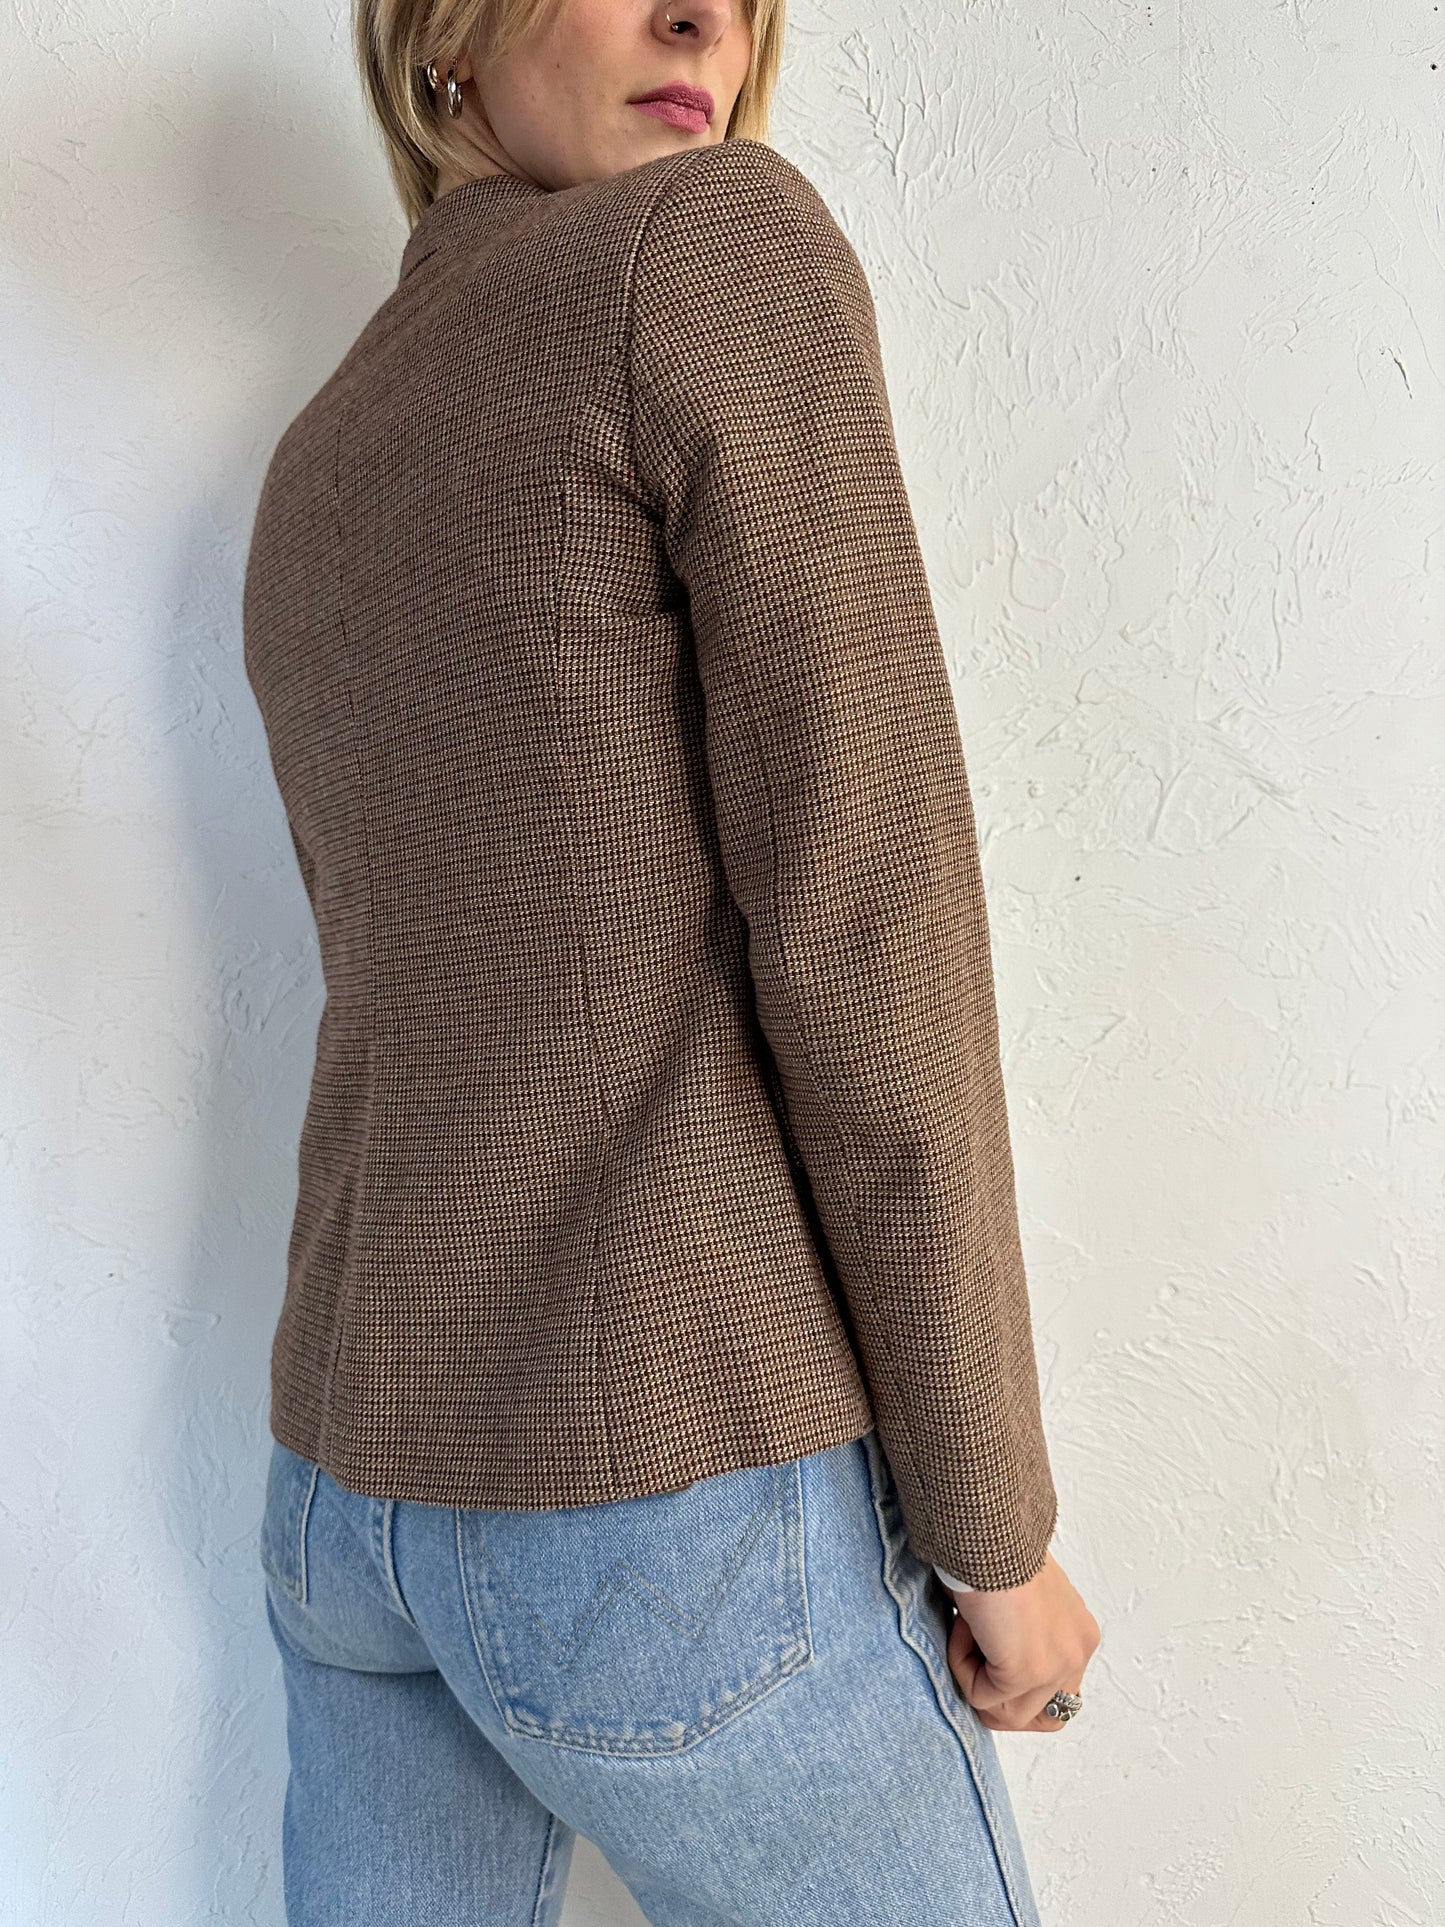 70s 'Louben' Brown Tweed Blazer Jacket / Small